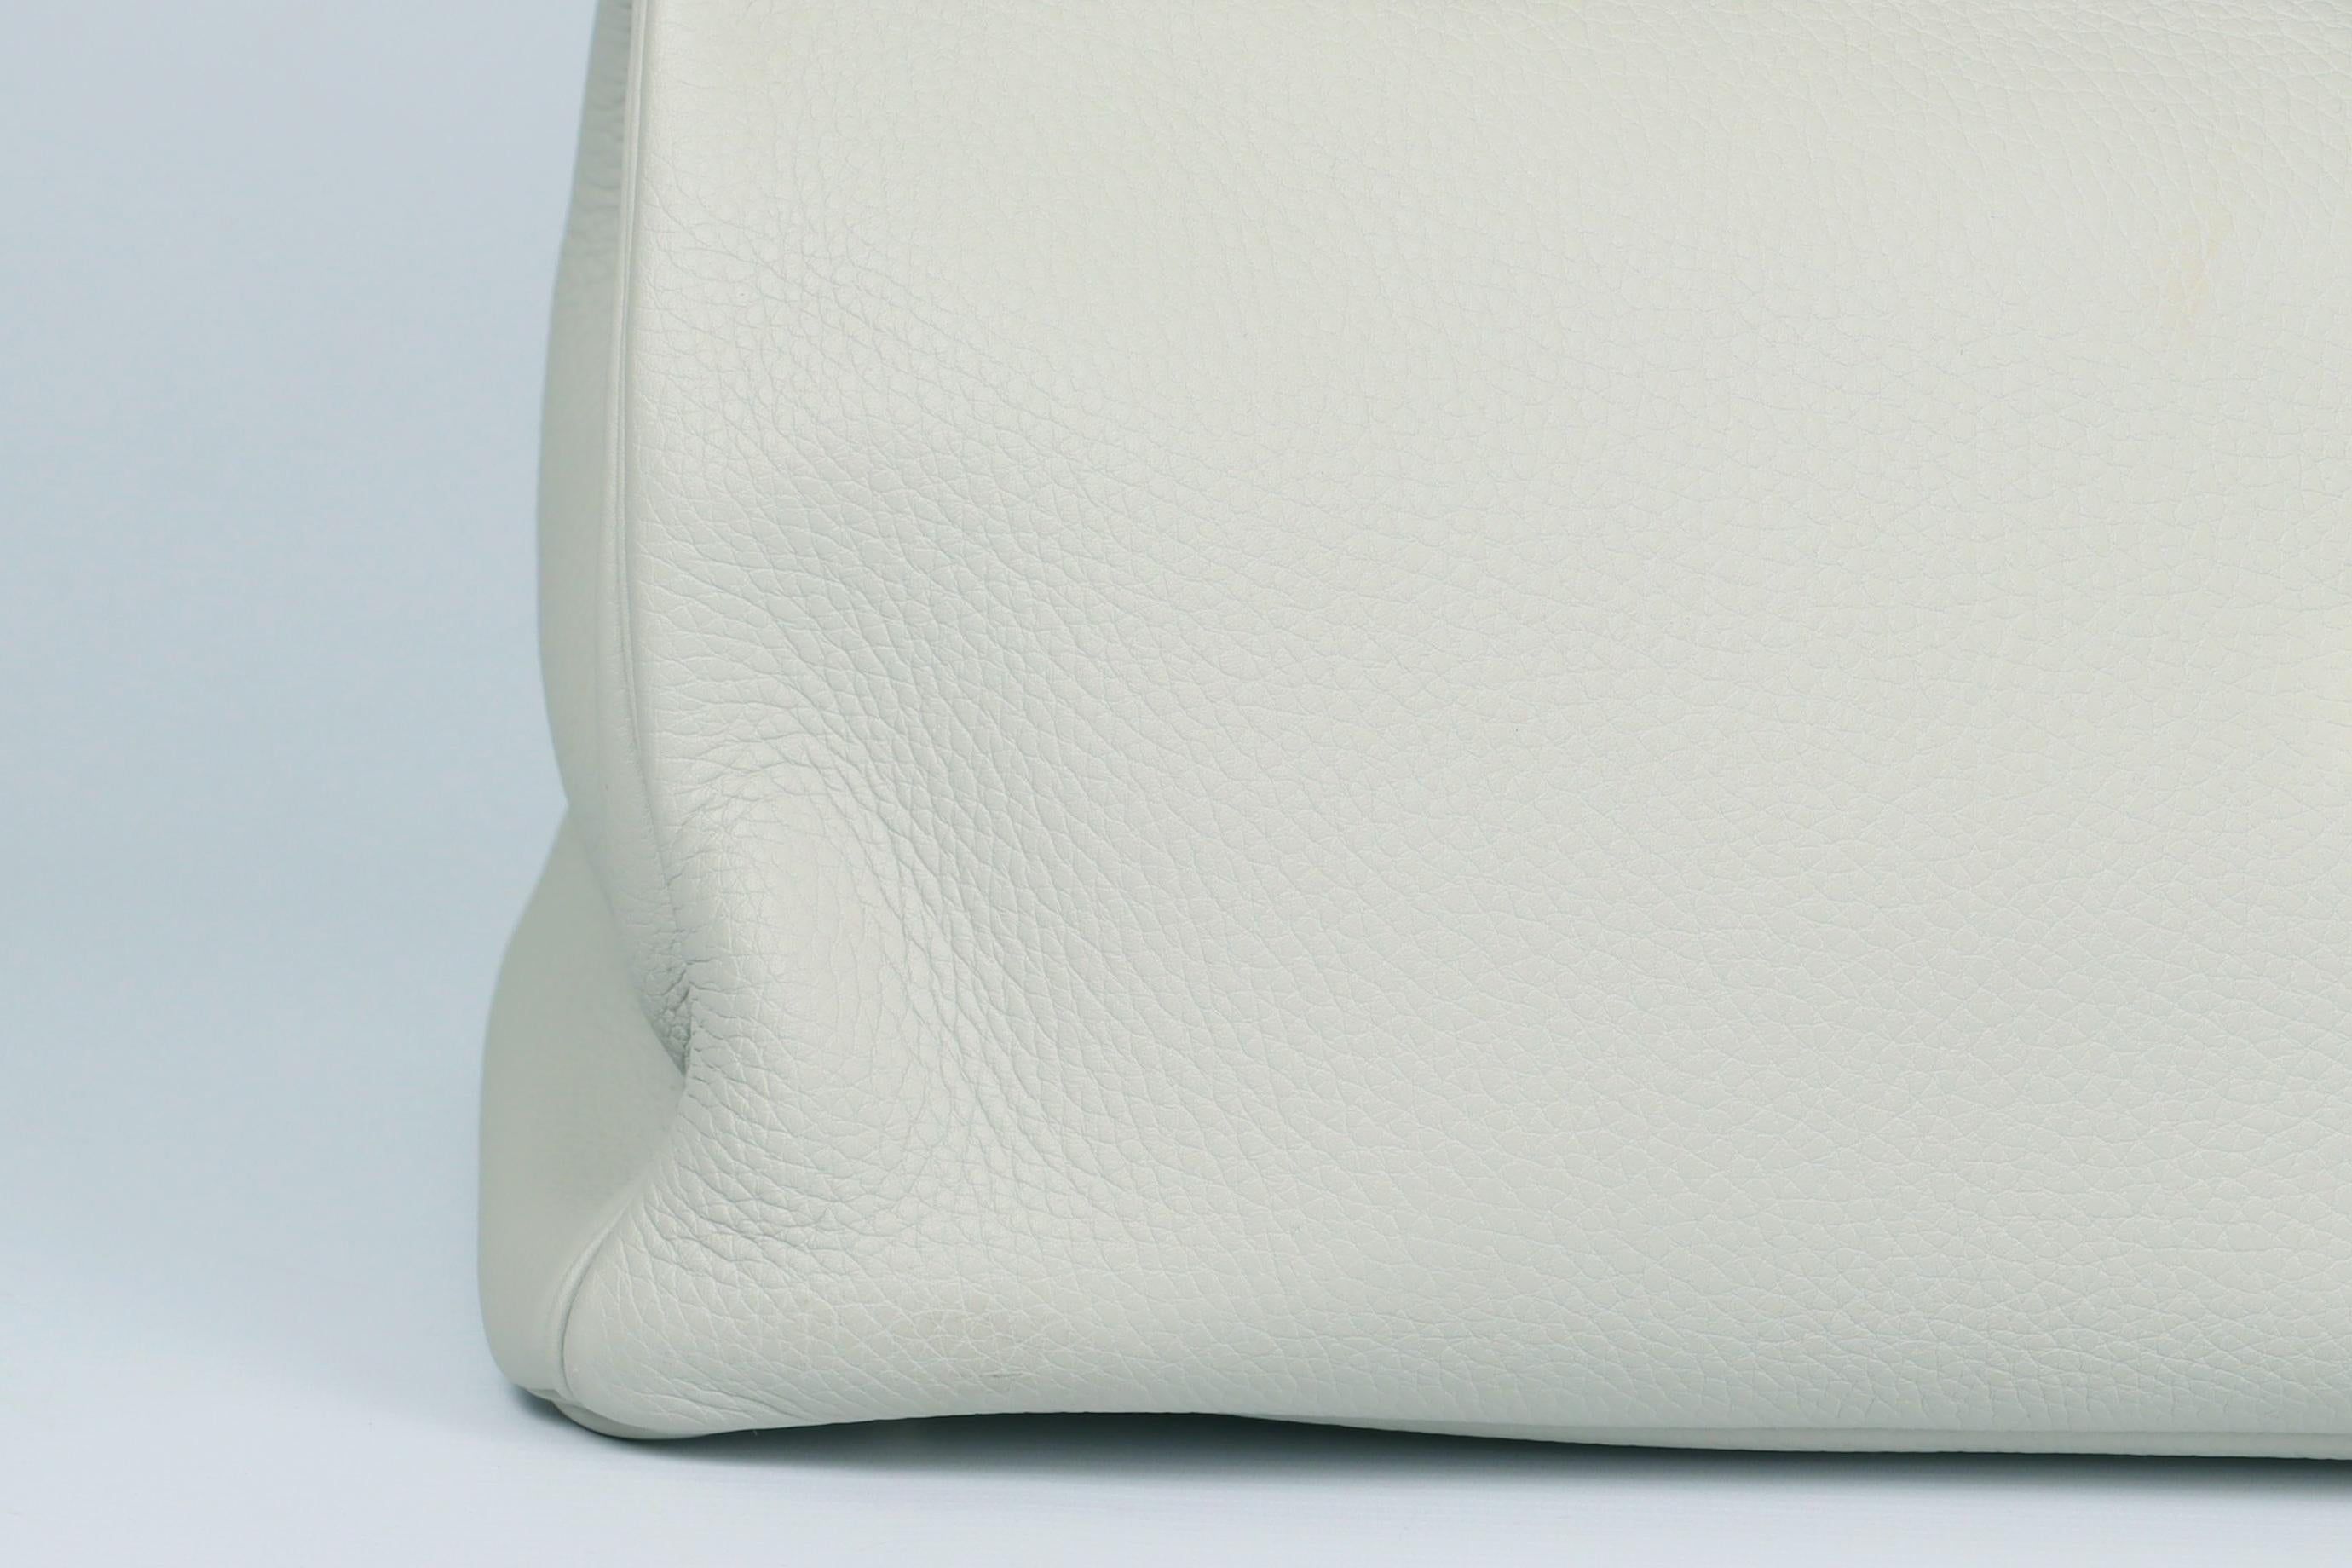 Hermès 2013 Birkin 35cm Togo Leather Bag For Sale 10